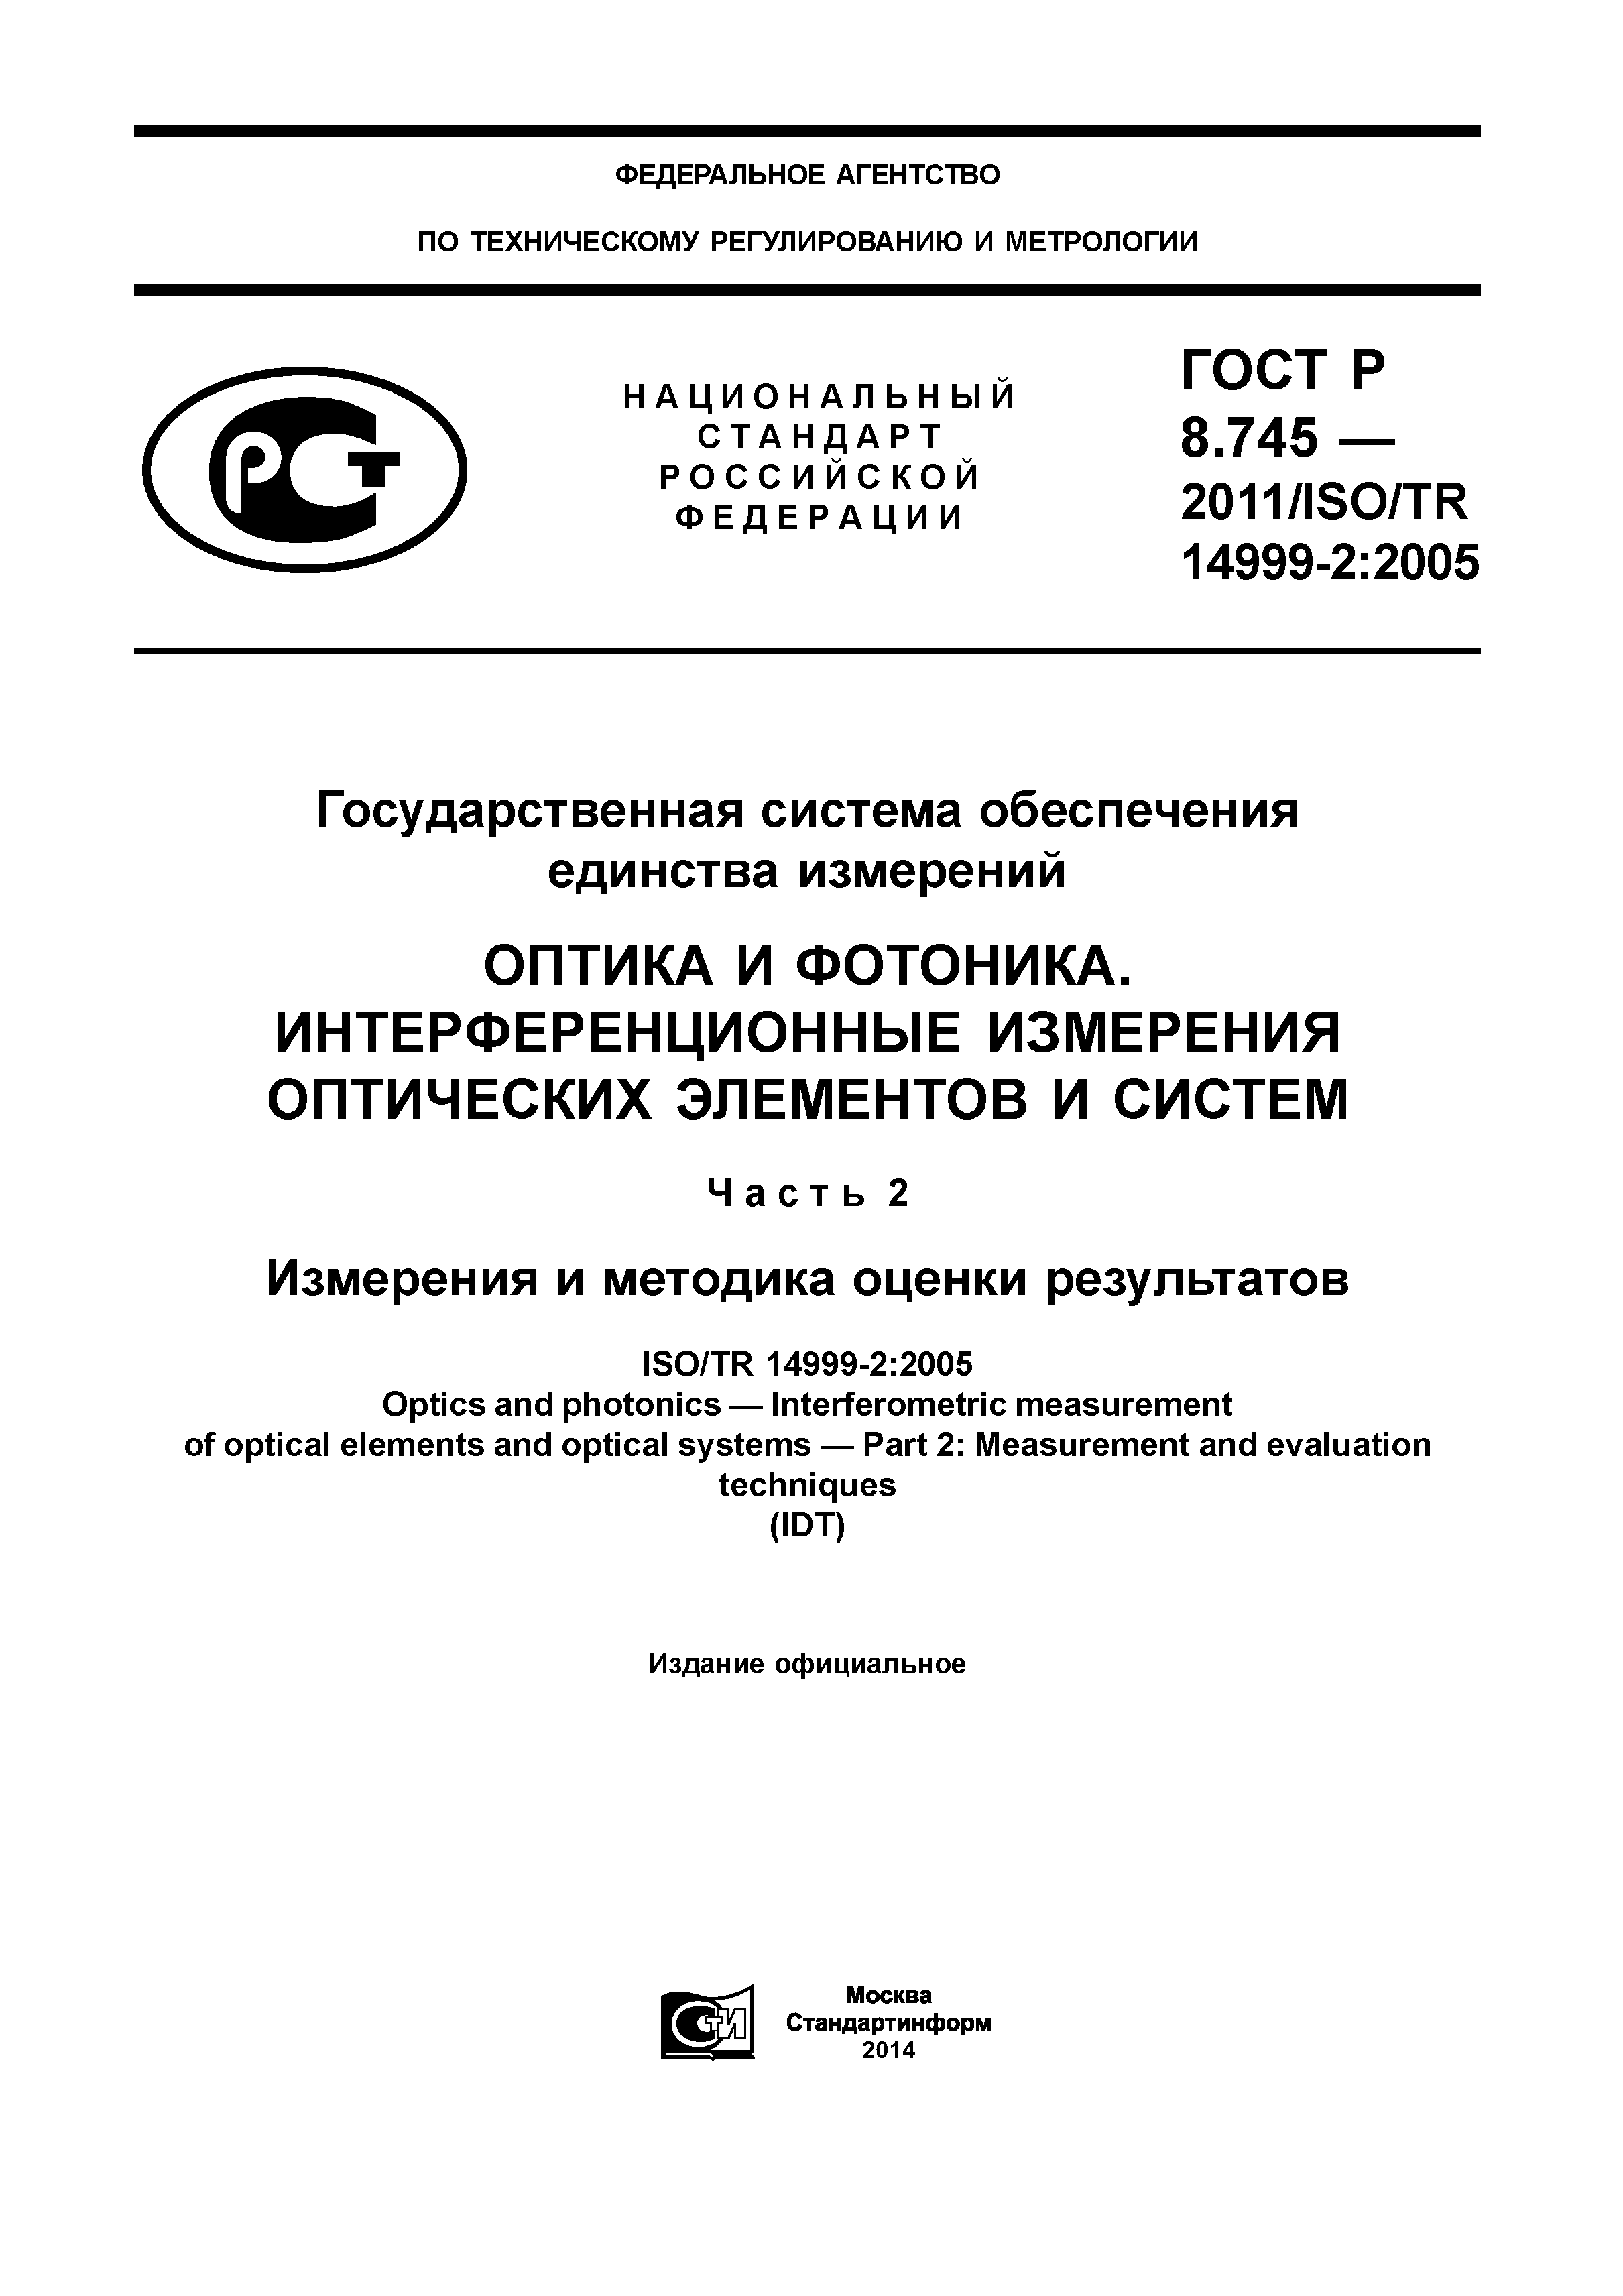 ГОСТ Р 8.745-2011